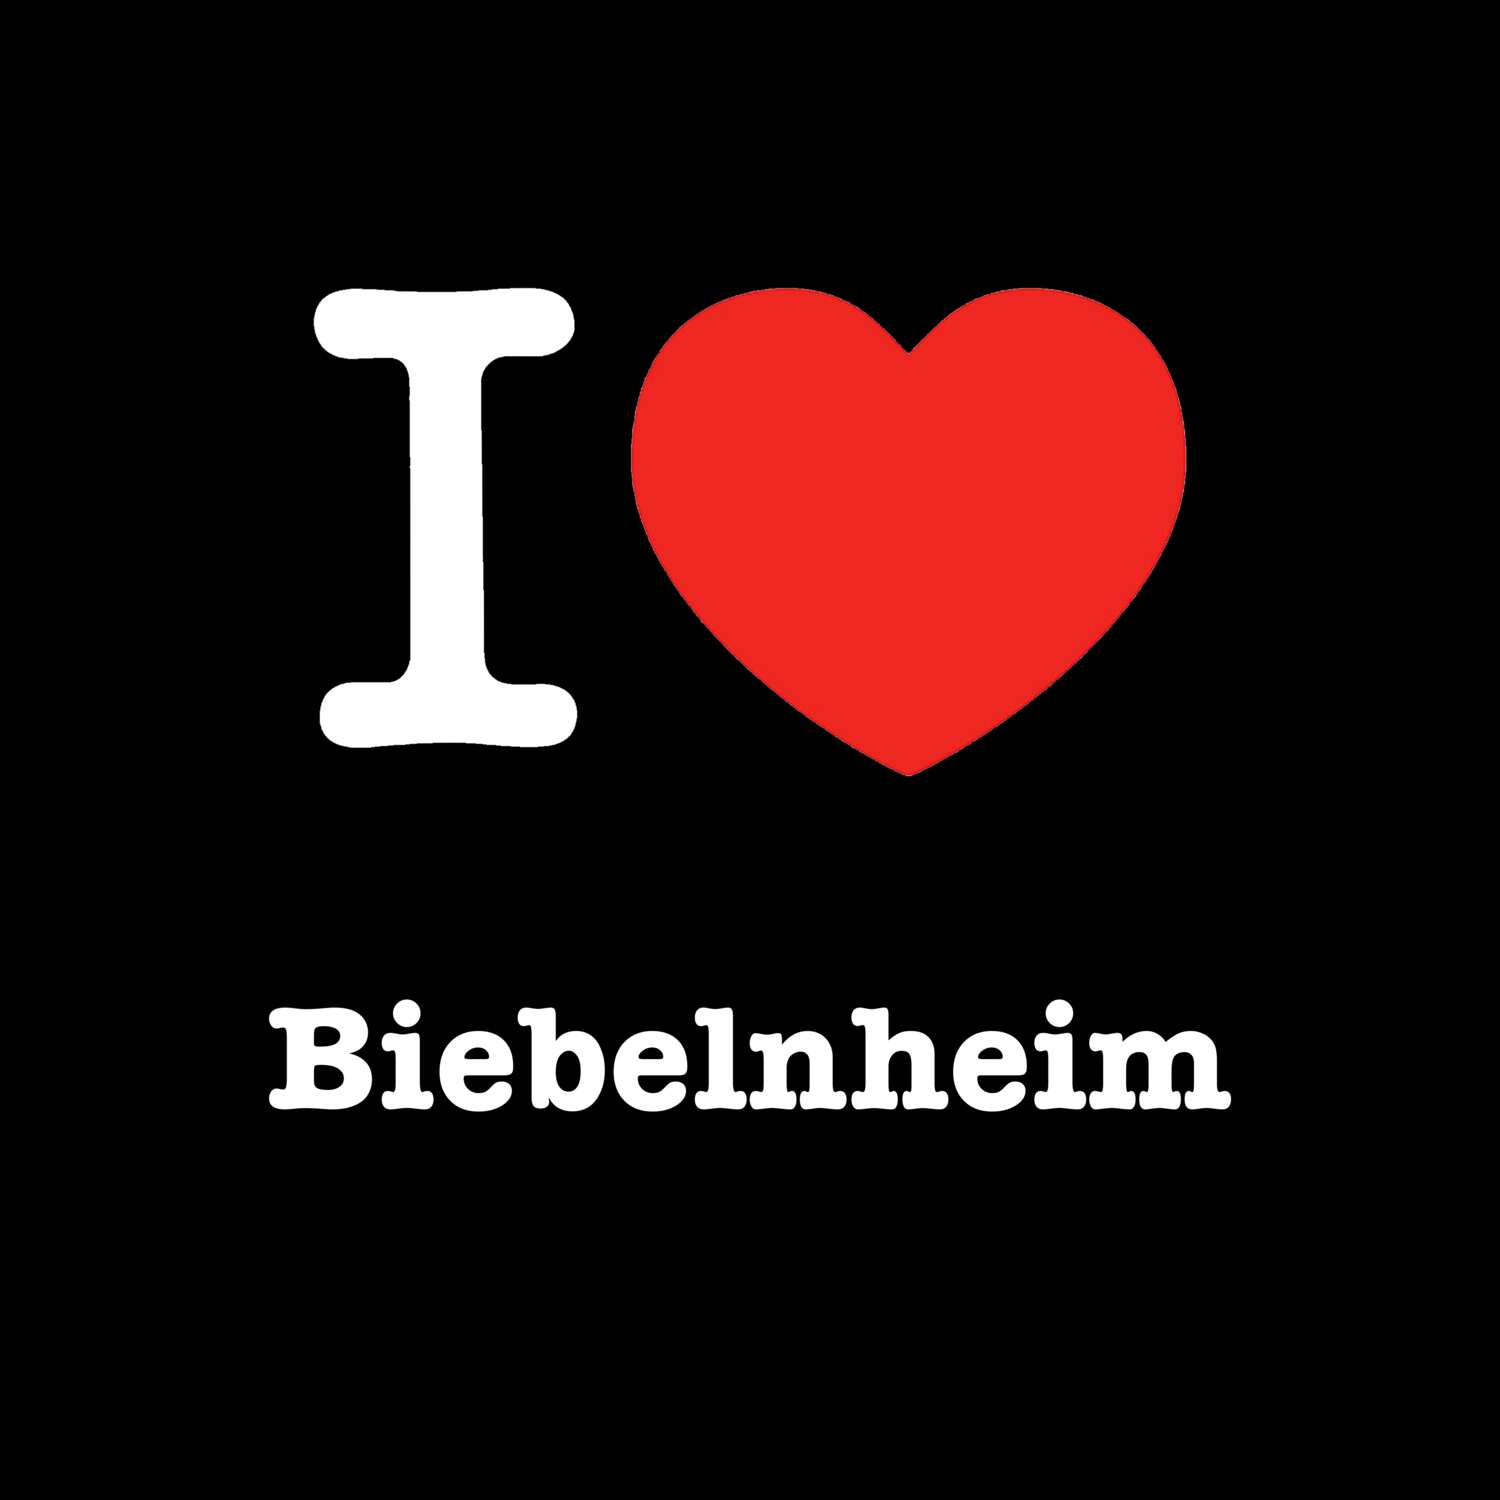 Biebelnheim T-Shirt »I love«